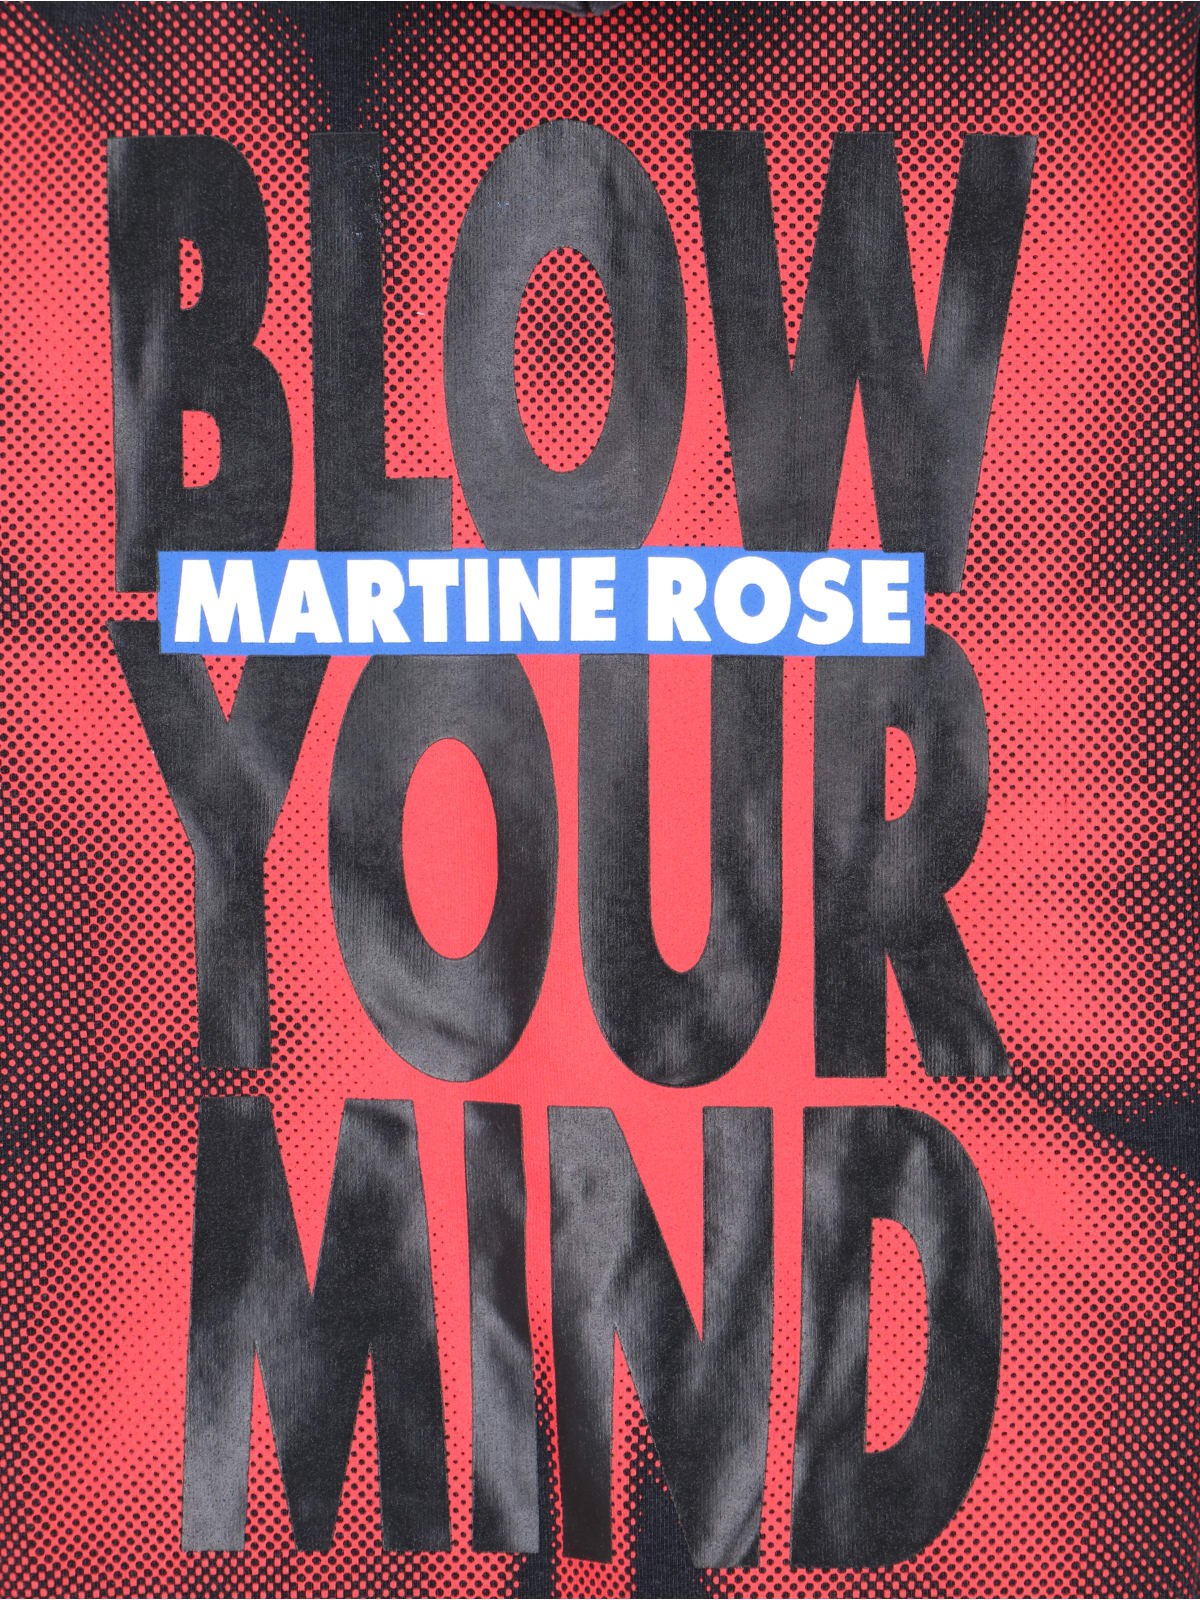 Shop Martine Rose Blow Your Mind Hoodie In Black